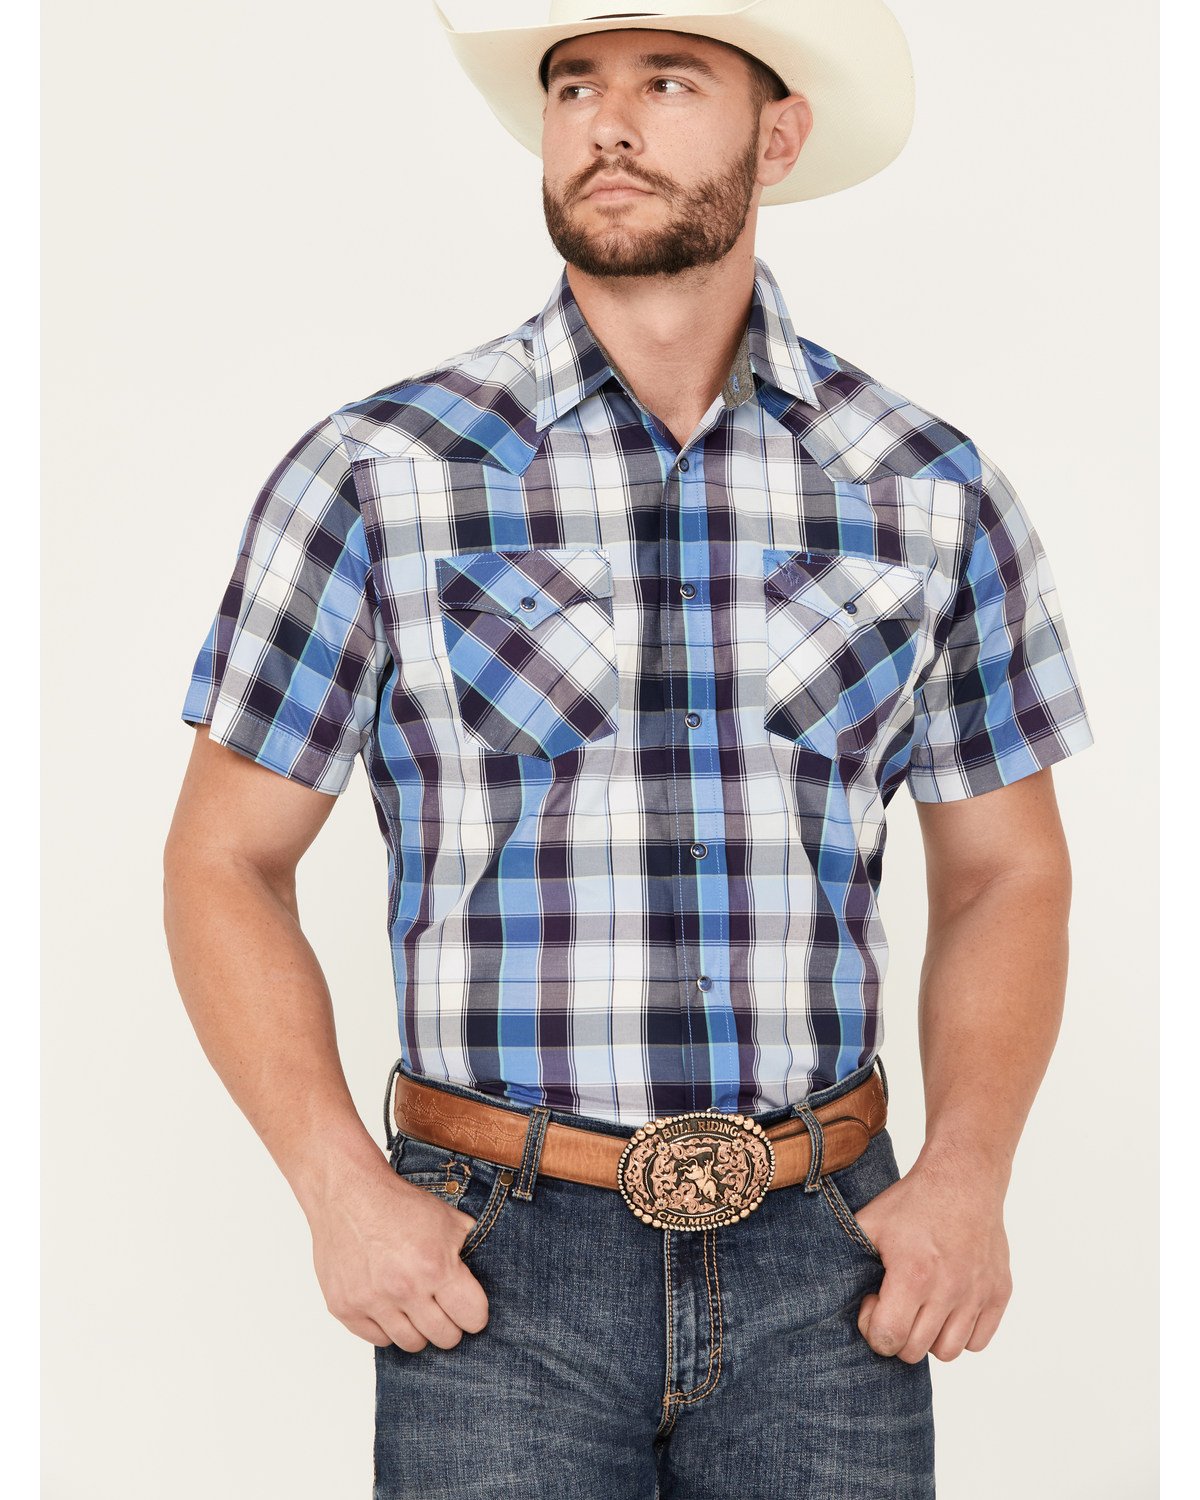 Rodeo Clothing Men's Plaid Print Short Sleeve Snap Western Shirt